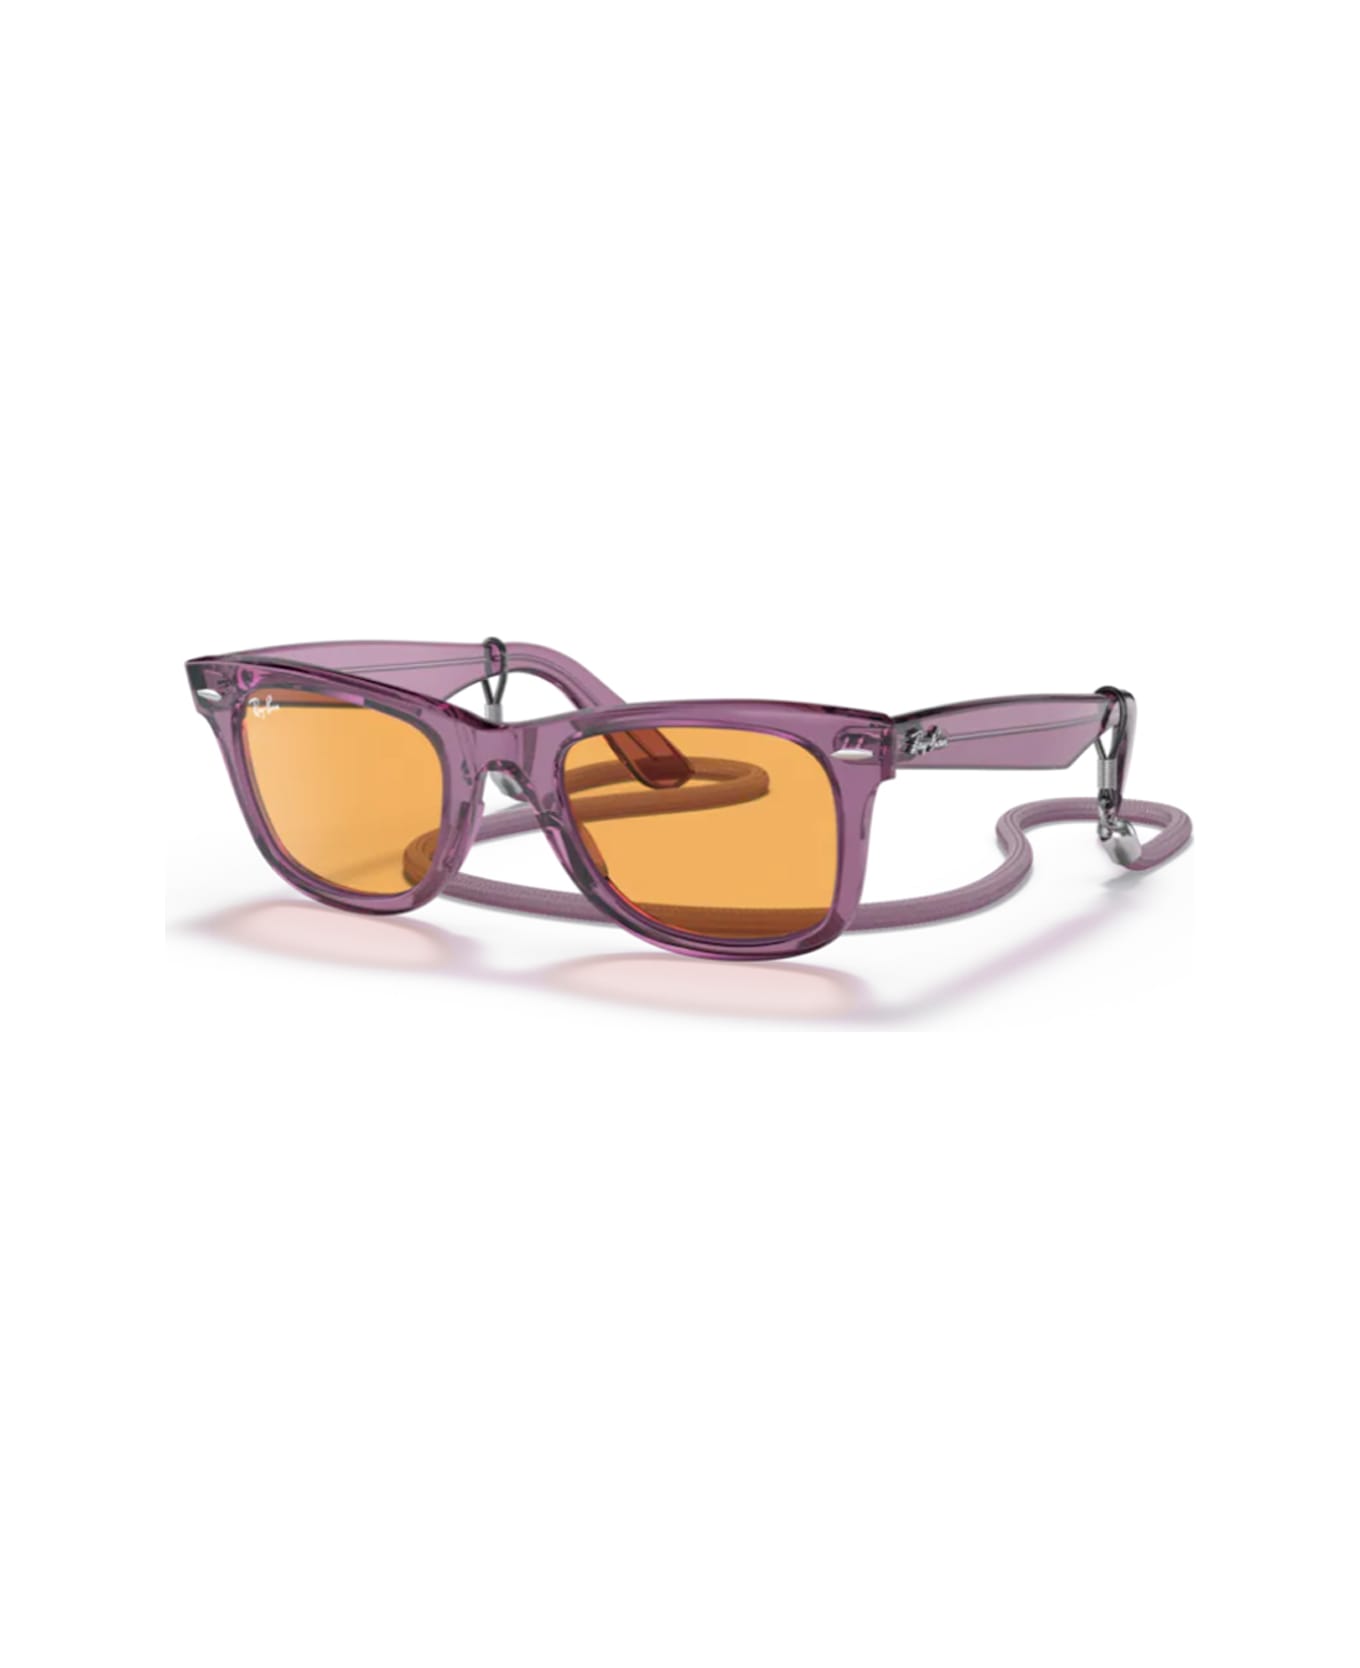 Ray-Ban Rb2140 Wayfarer Sunglasses - Viola サングラス